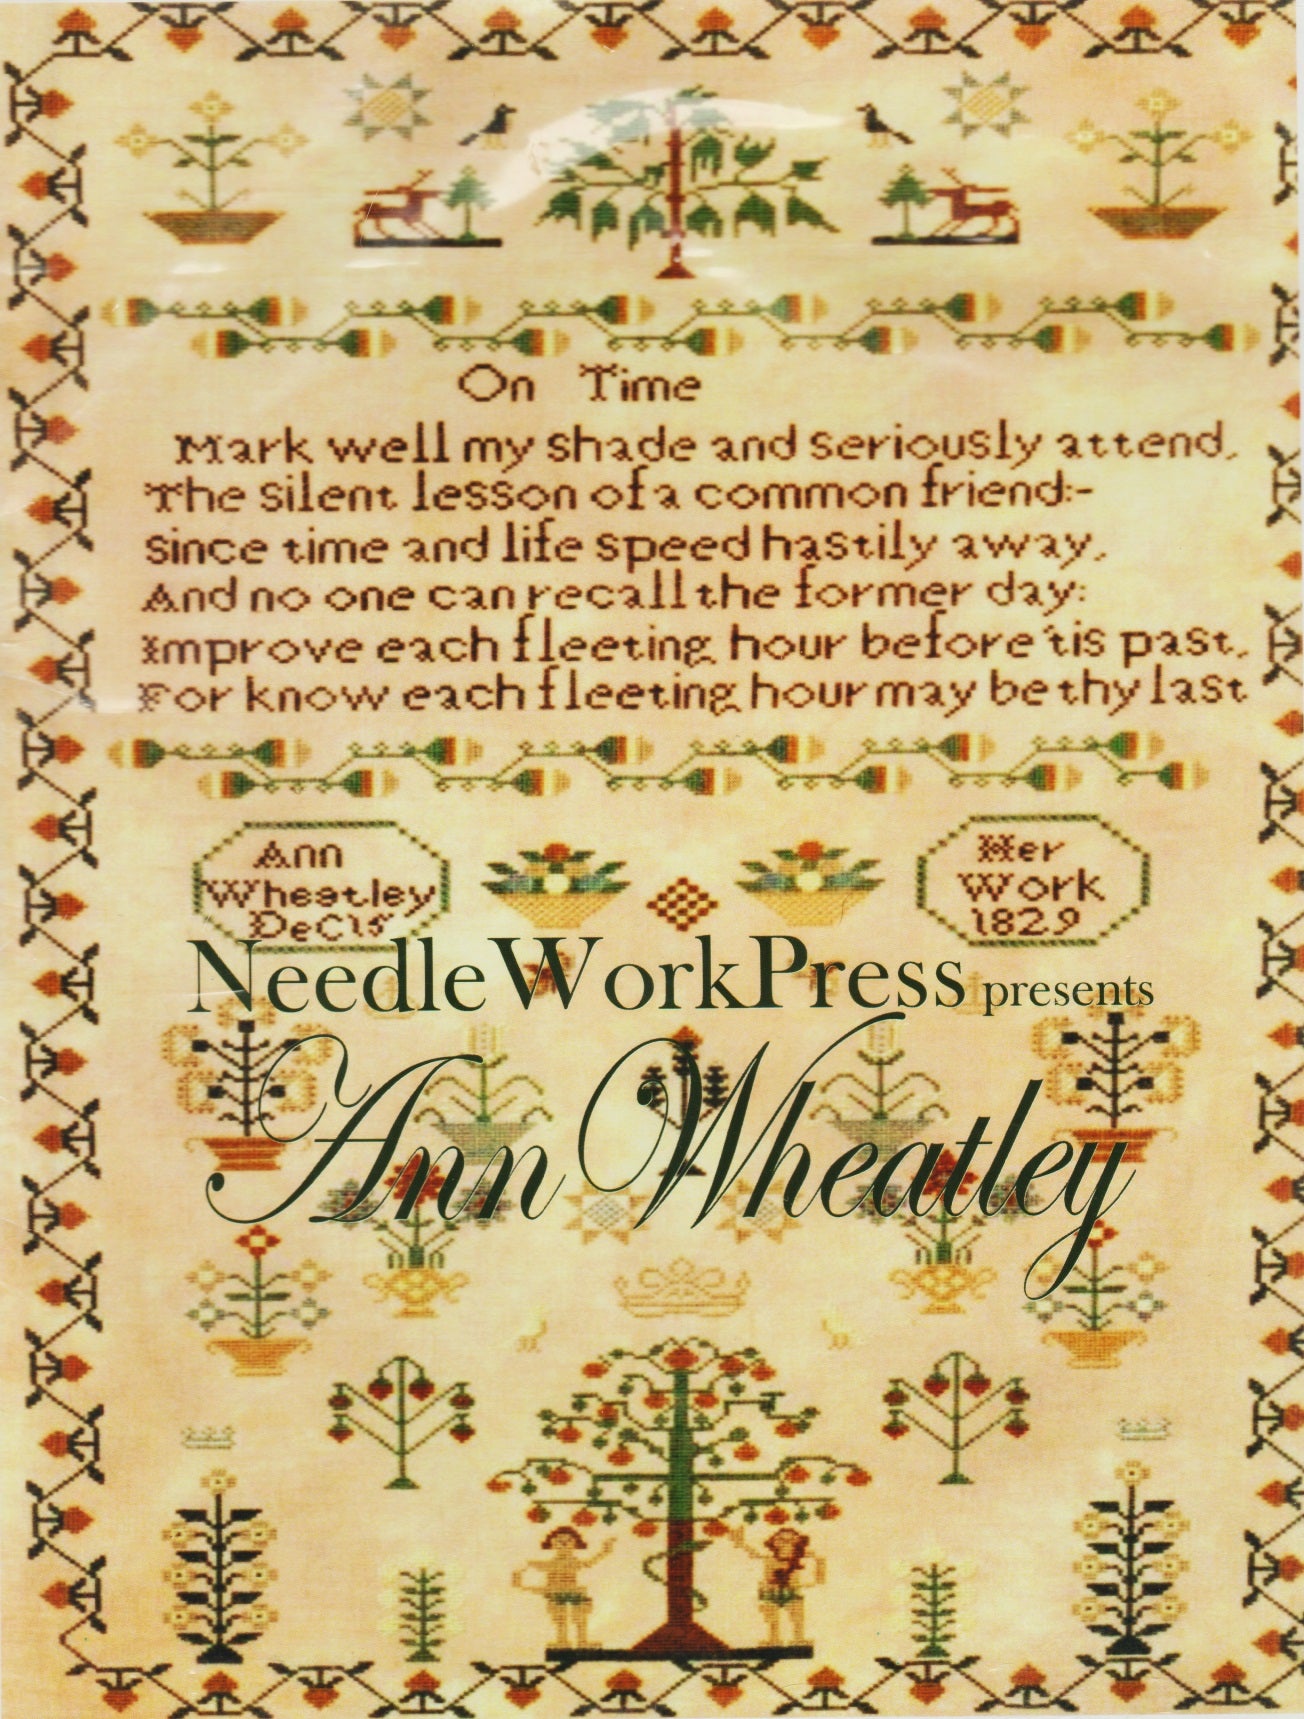 Needle WorkPress Ann Wheatley 1829 cross stitch pattern